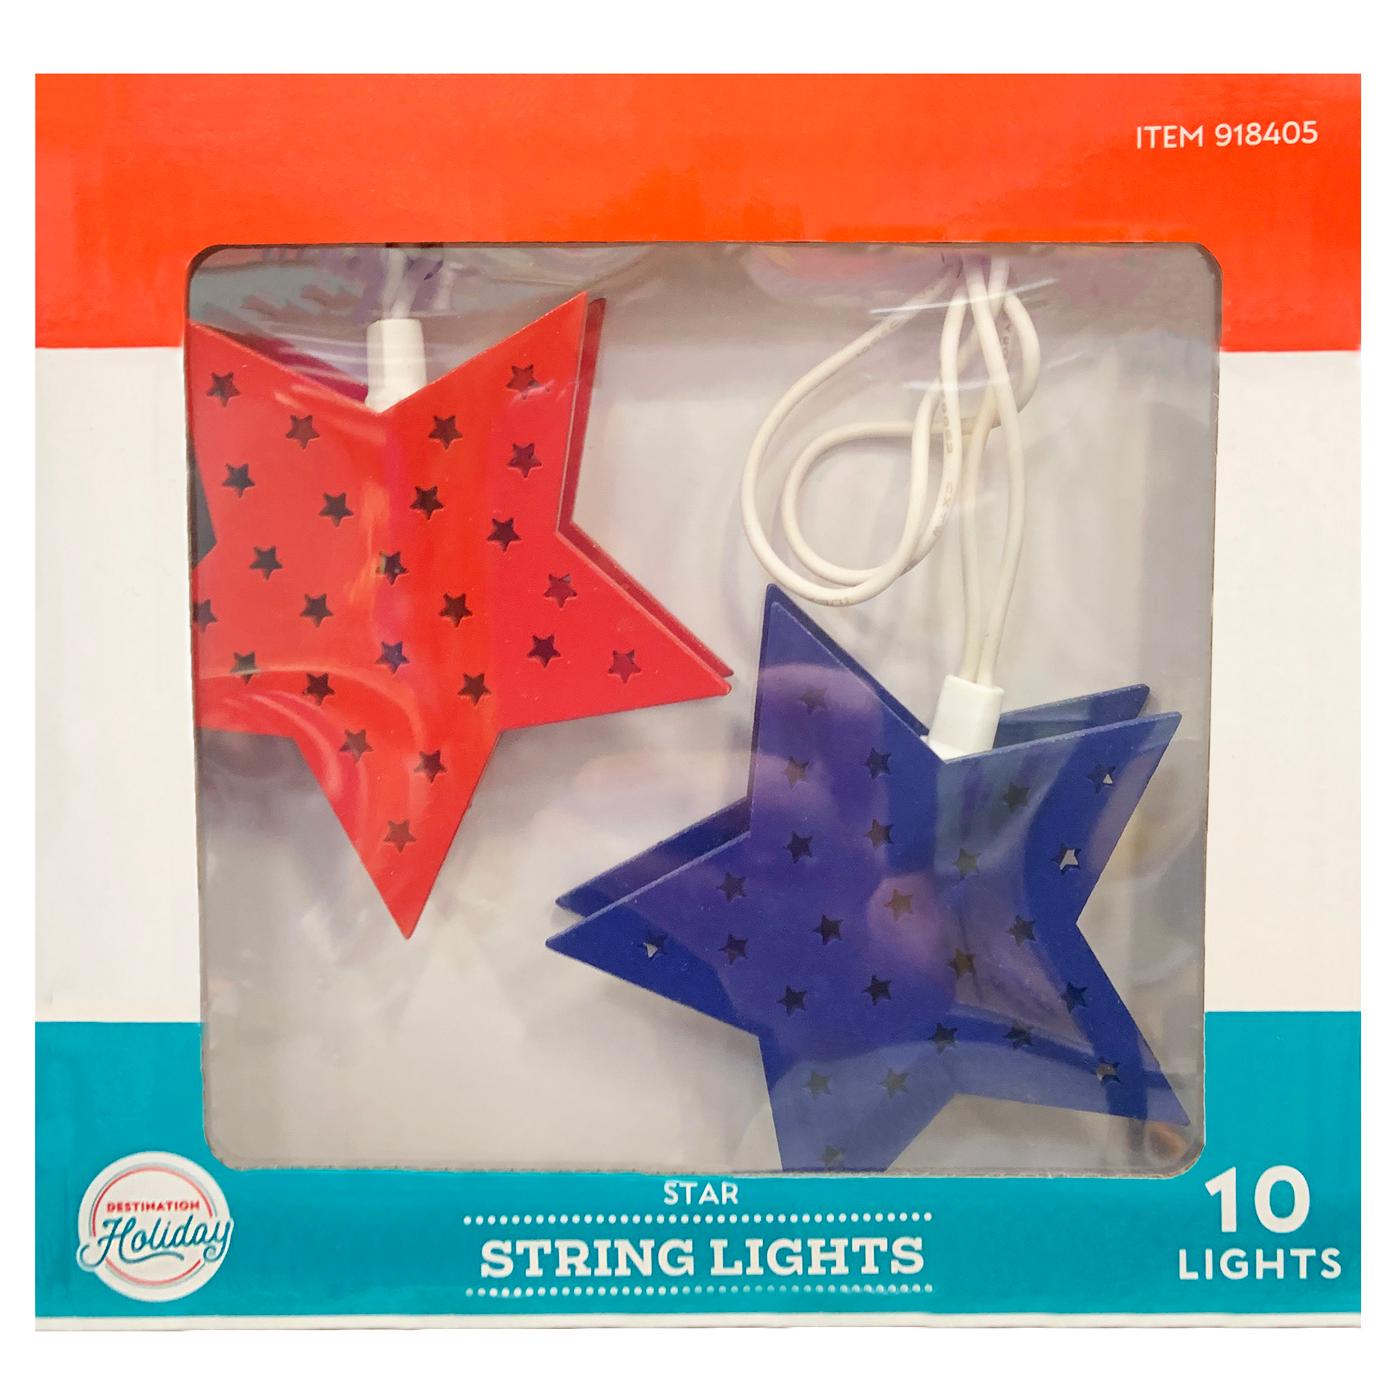 Destination Holiday Star Shape Patriotic String Lights; image 1 of 2